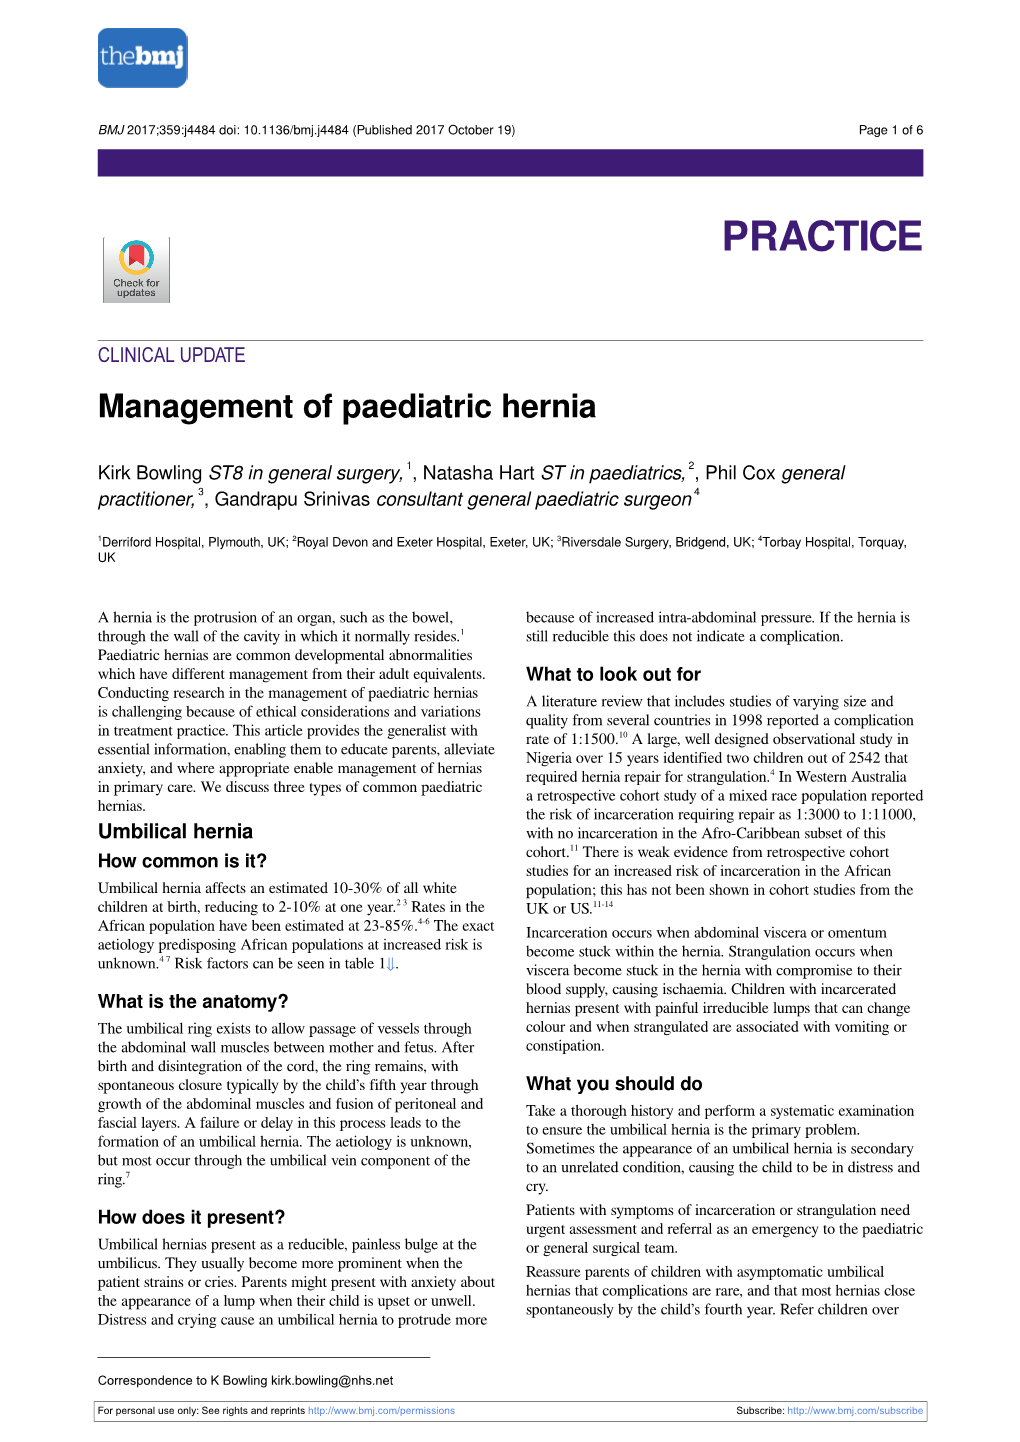 Management of Paediatric Hernia